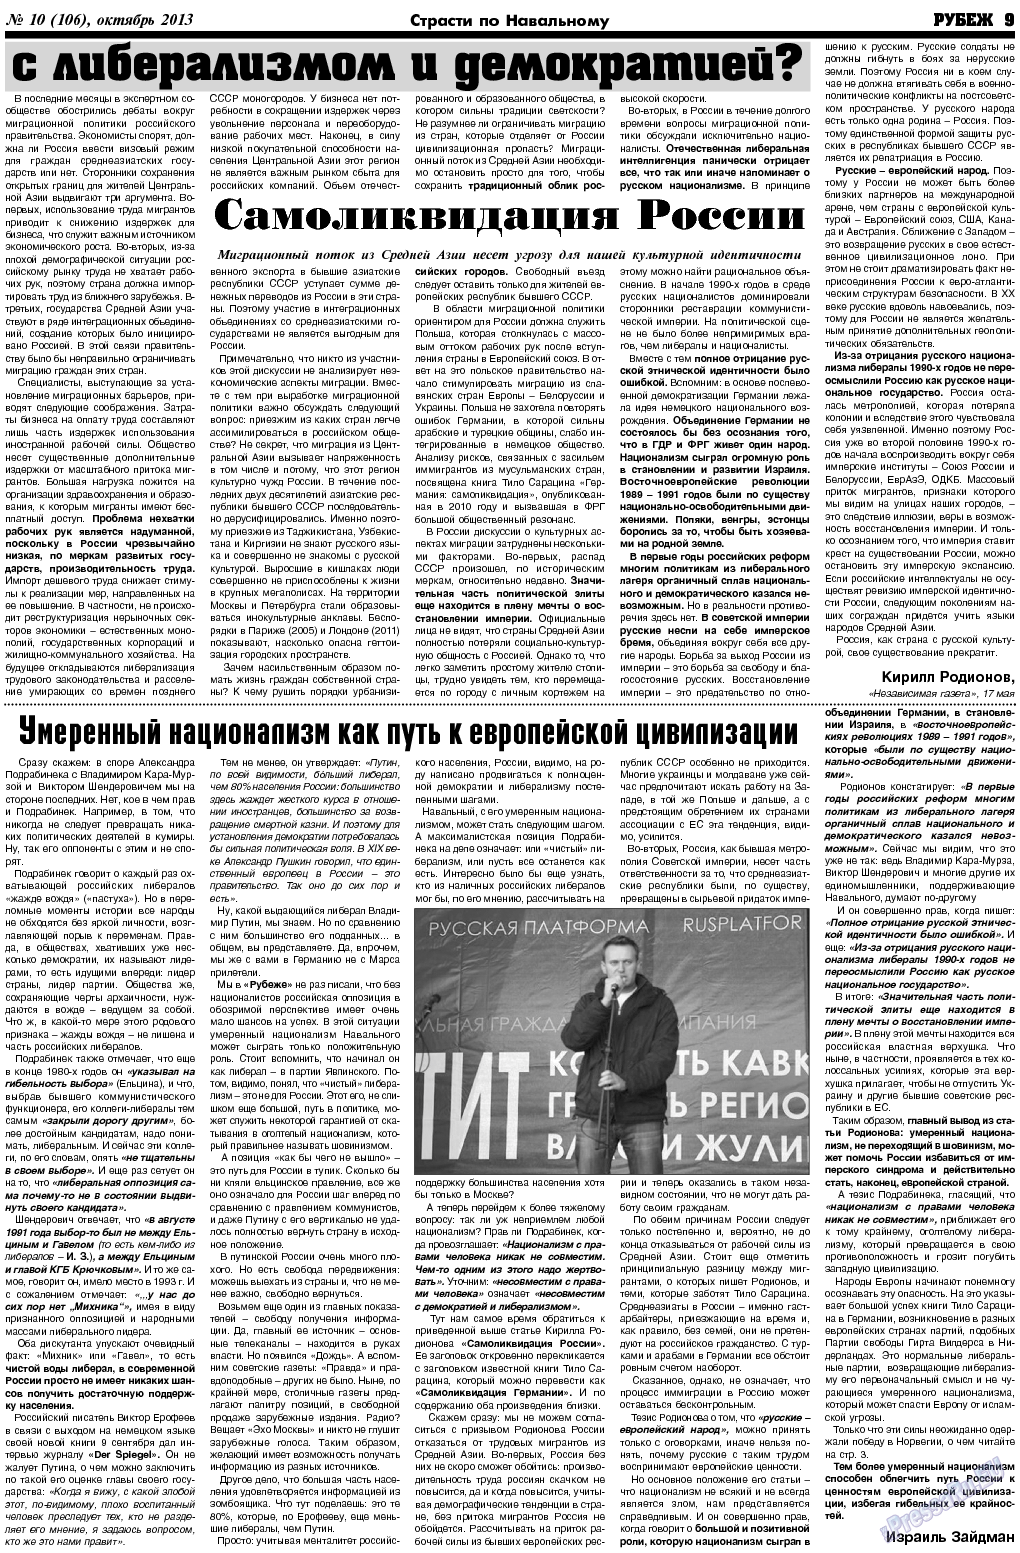 Рубеж, газета. 2013 №10 стр.9